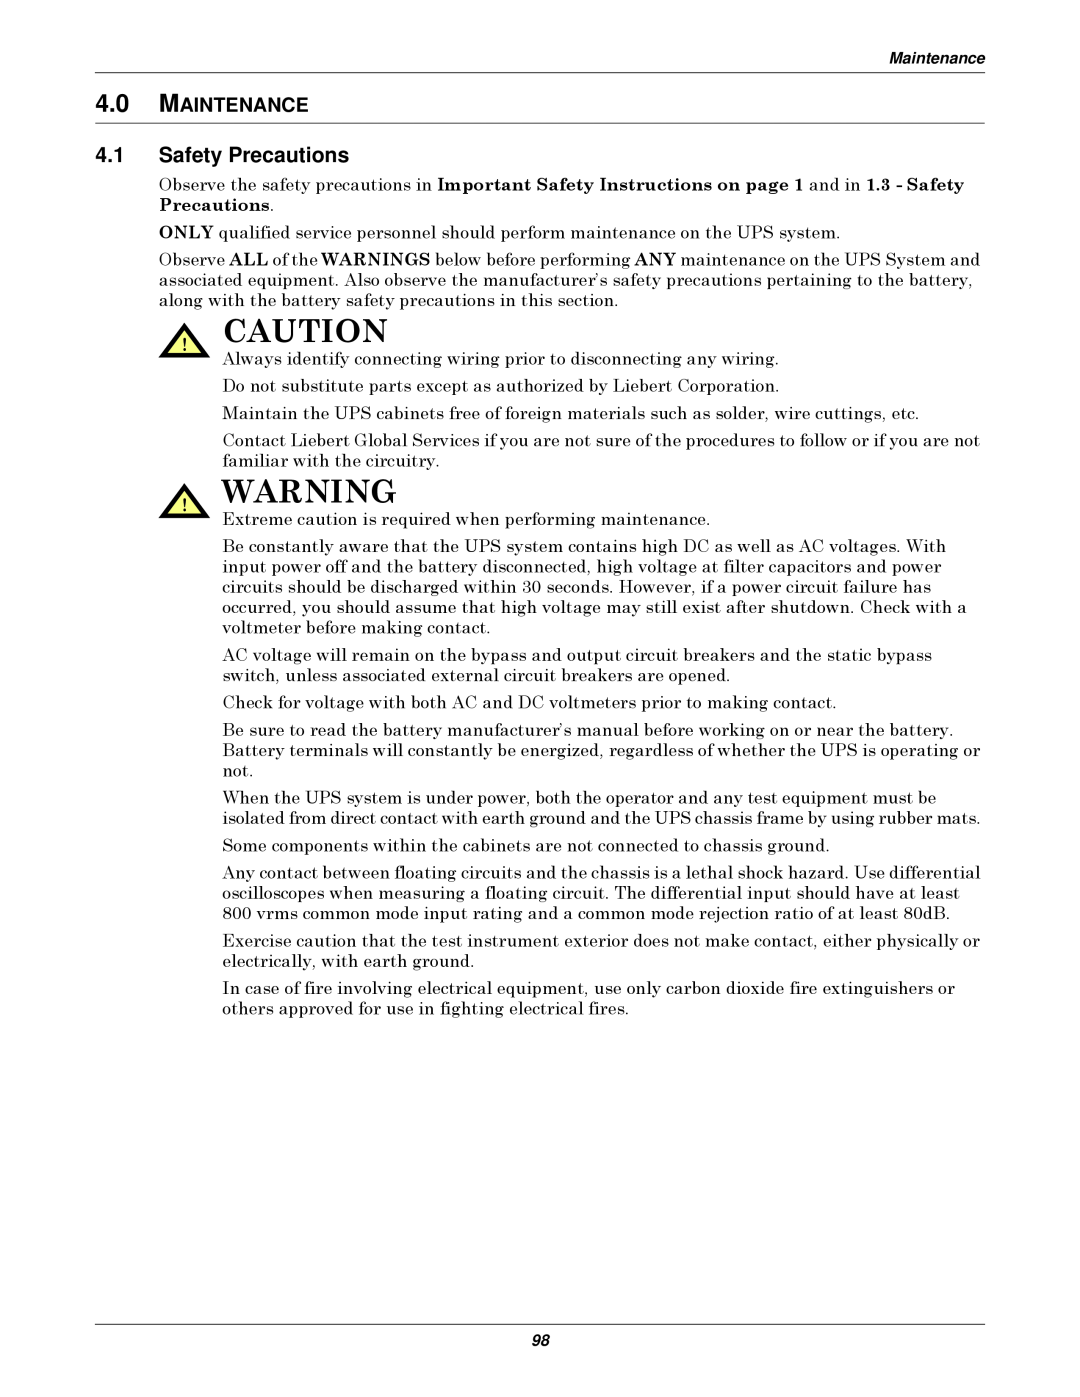 Emerson Series 610 manual Safety Precautions, Maintenance 